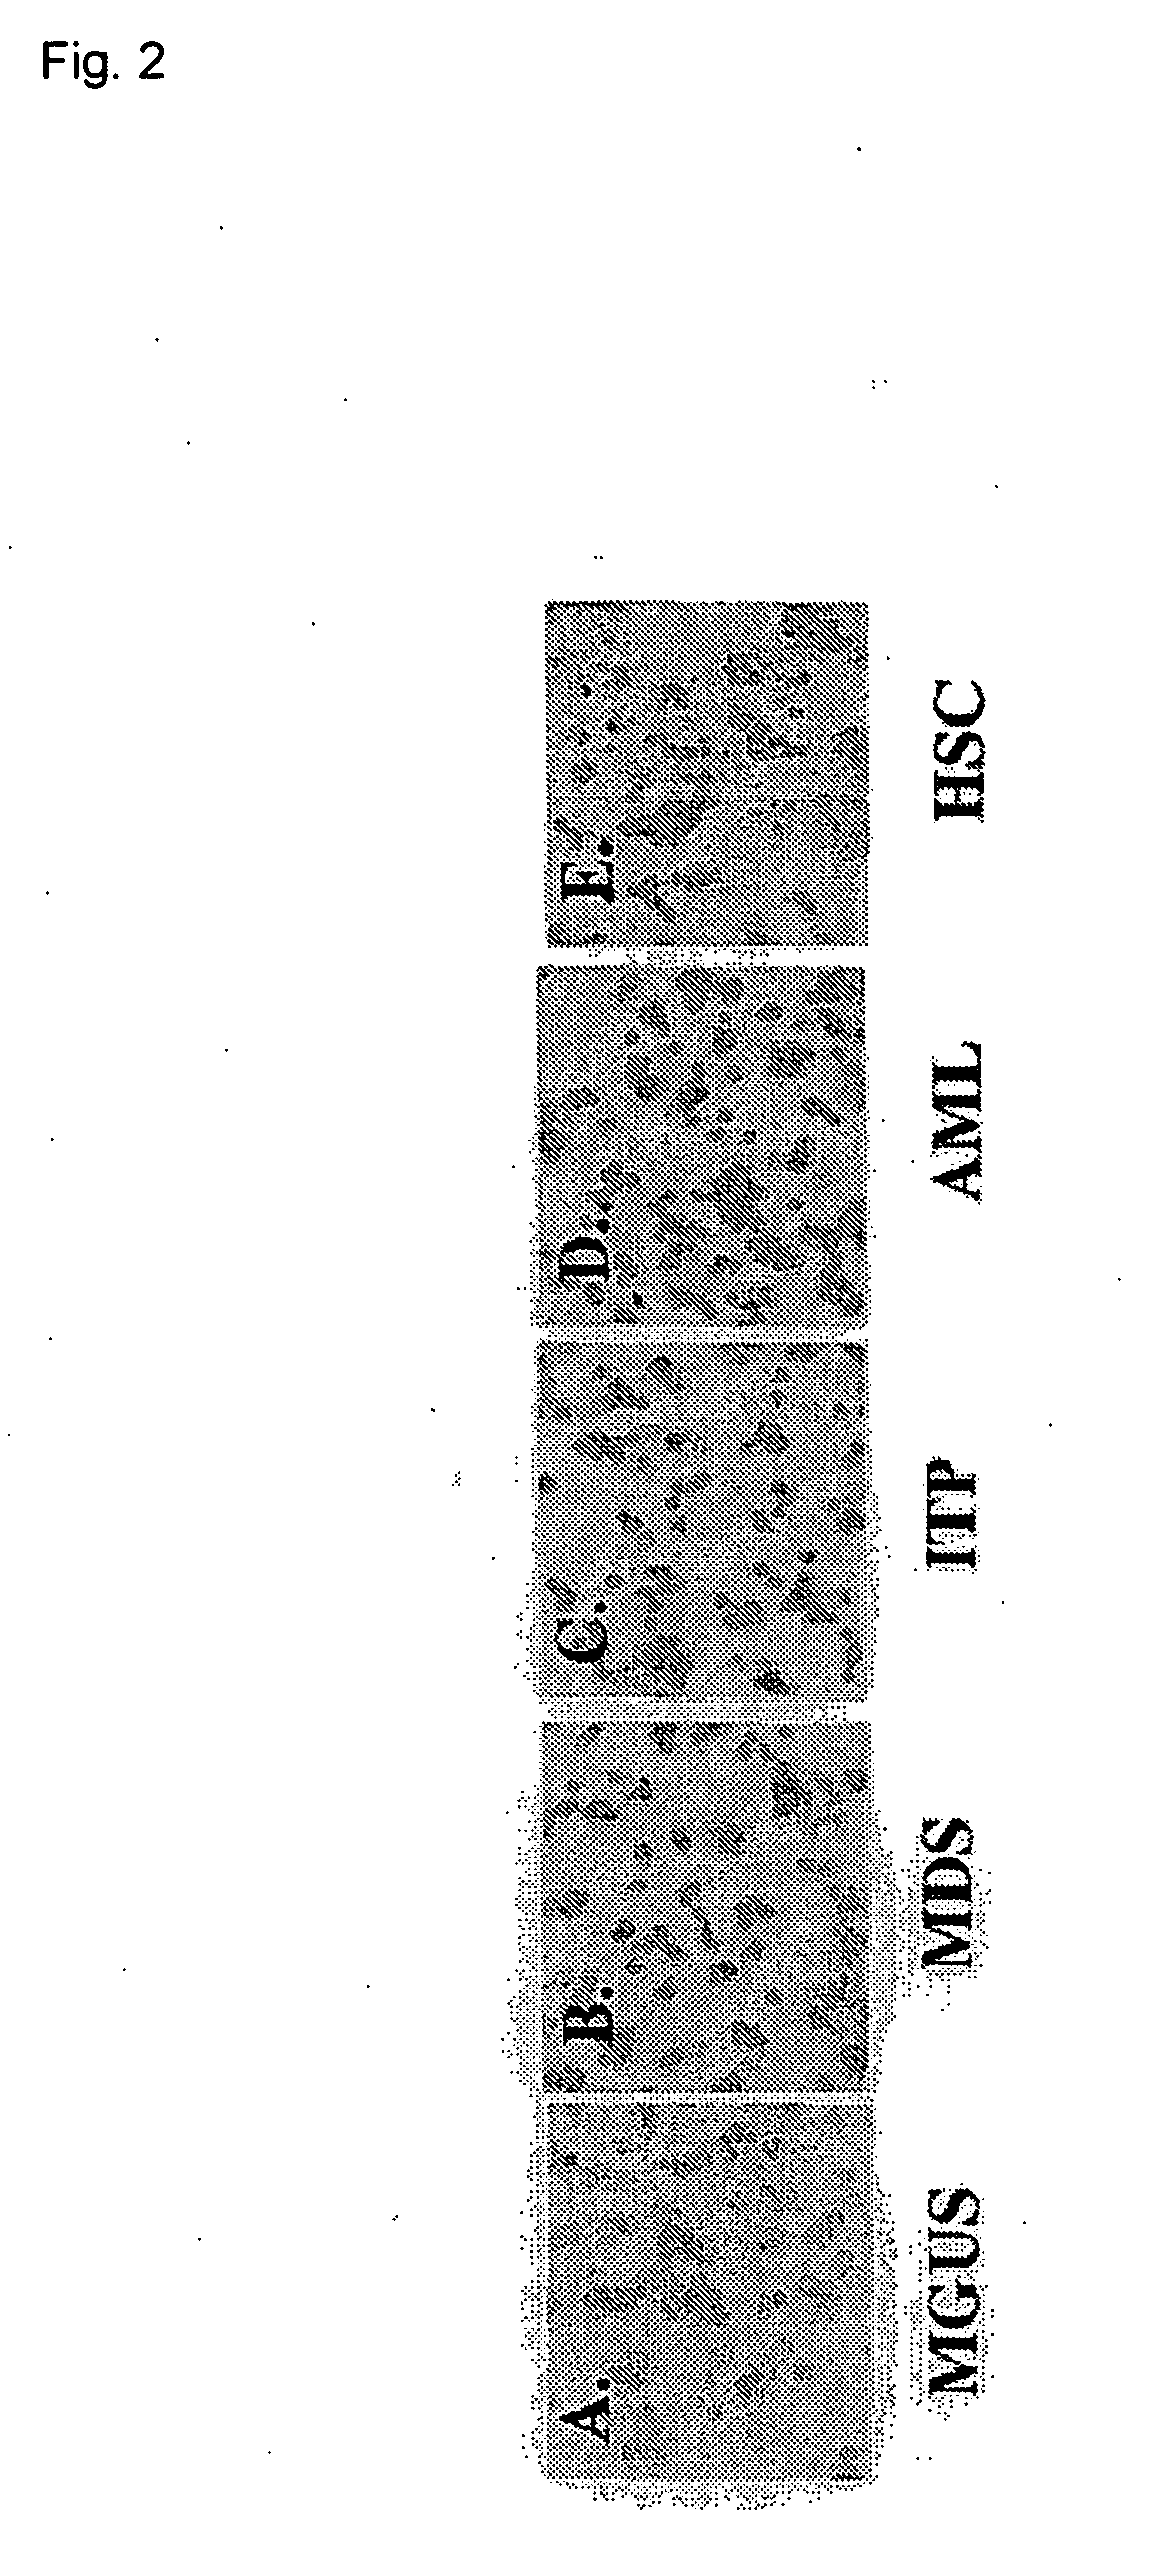 Method of inhibiting production of osteopontin